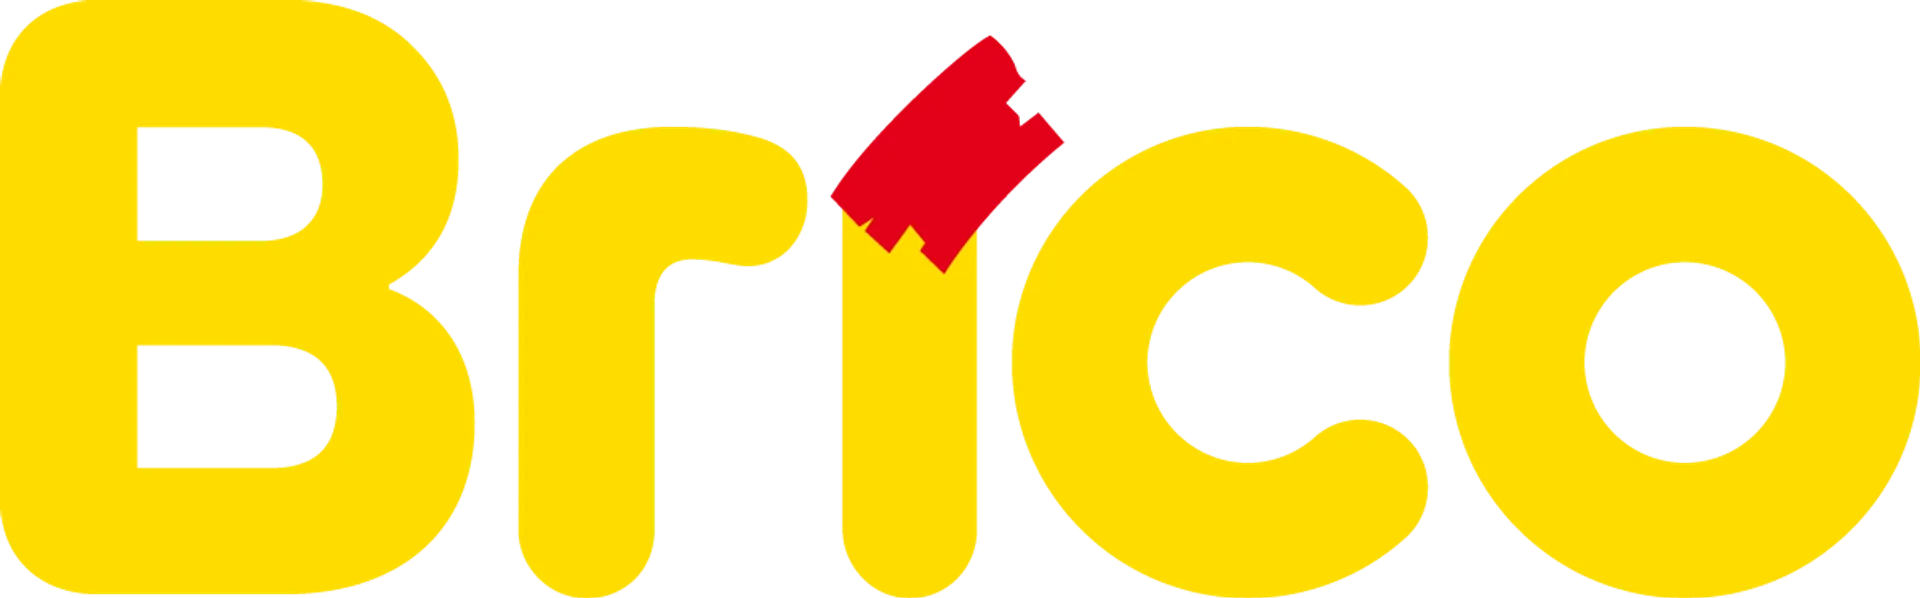 BRICO logo